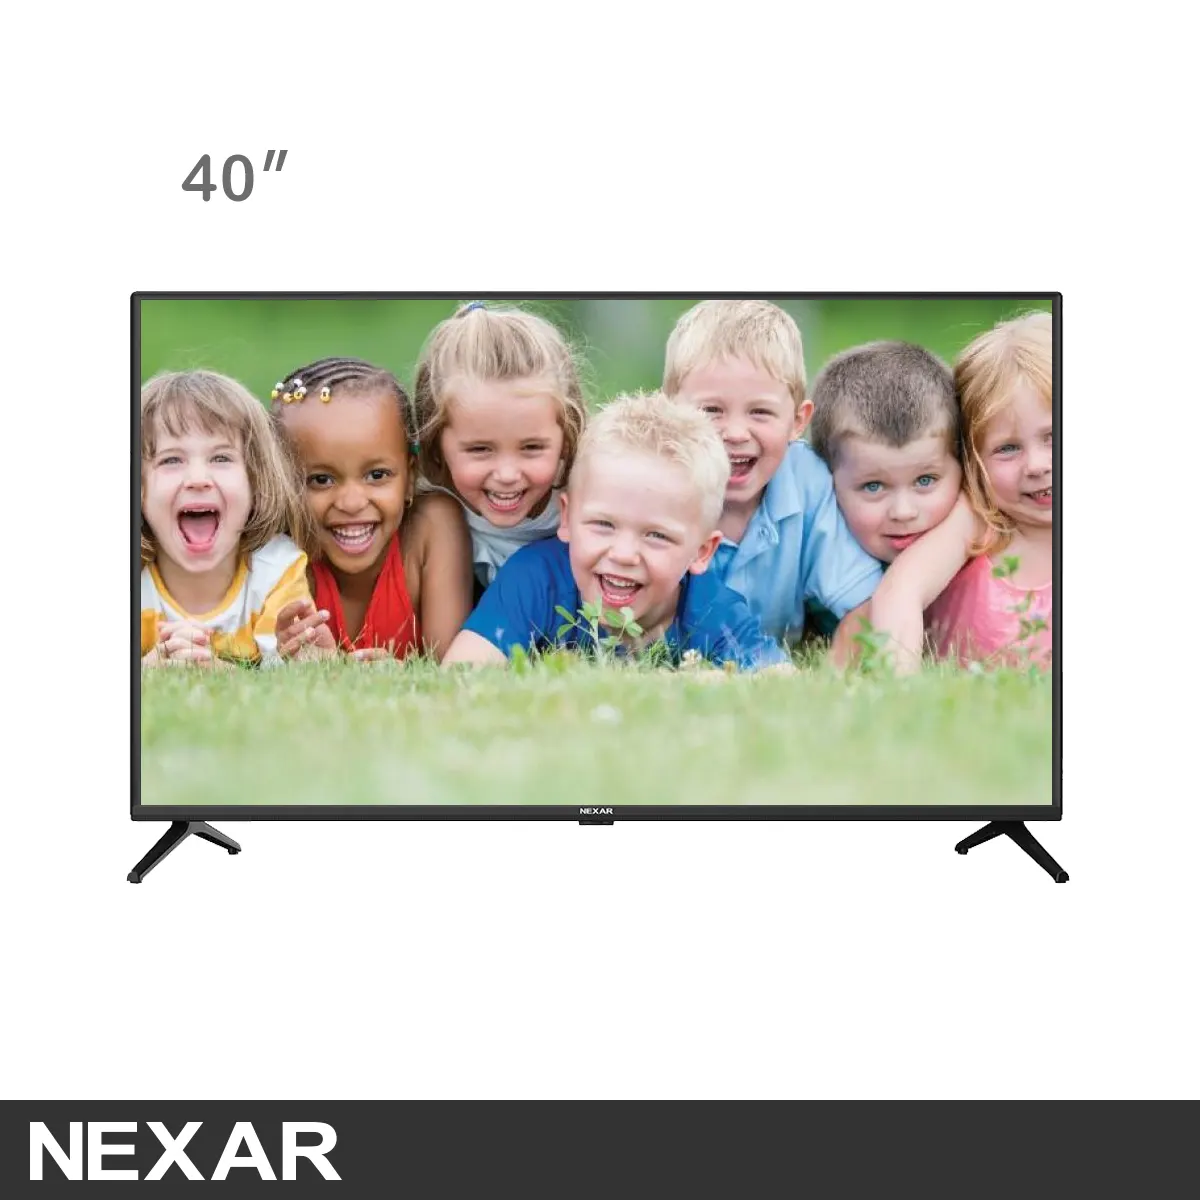 تلویزیون ال ای دی نکسار 40 اینچ مدل NTV-H40B214N